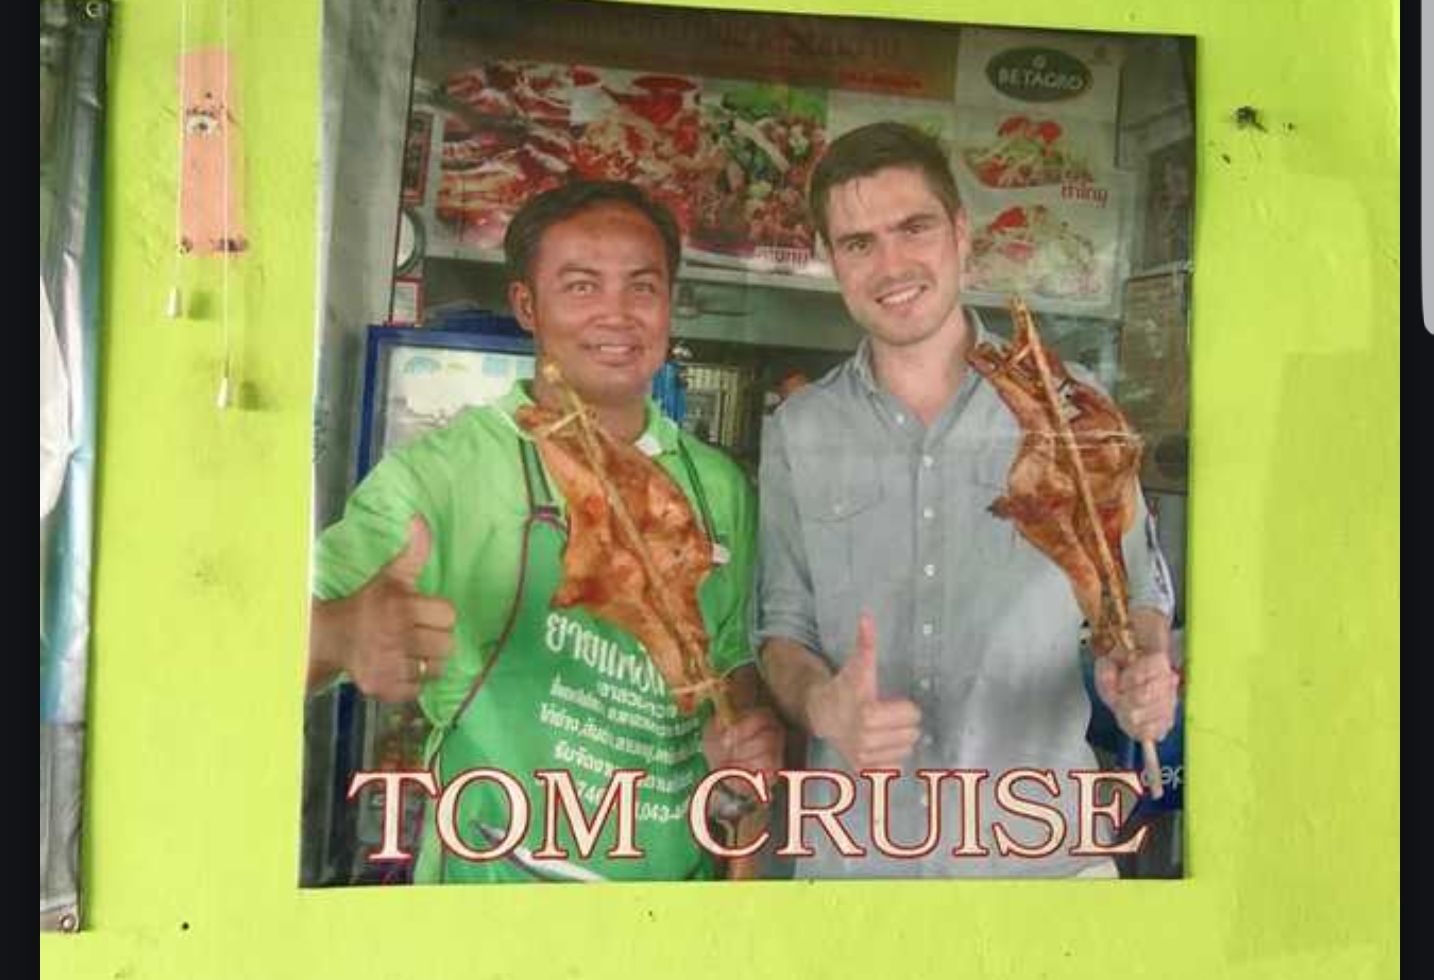 A Thai restaurant had some random white guy pretend to be Tom Cruise